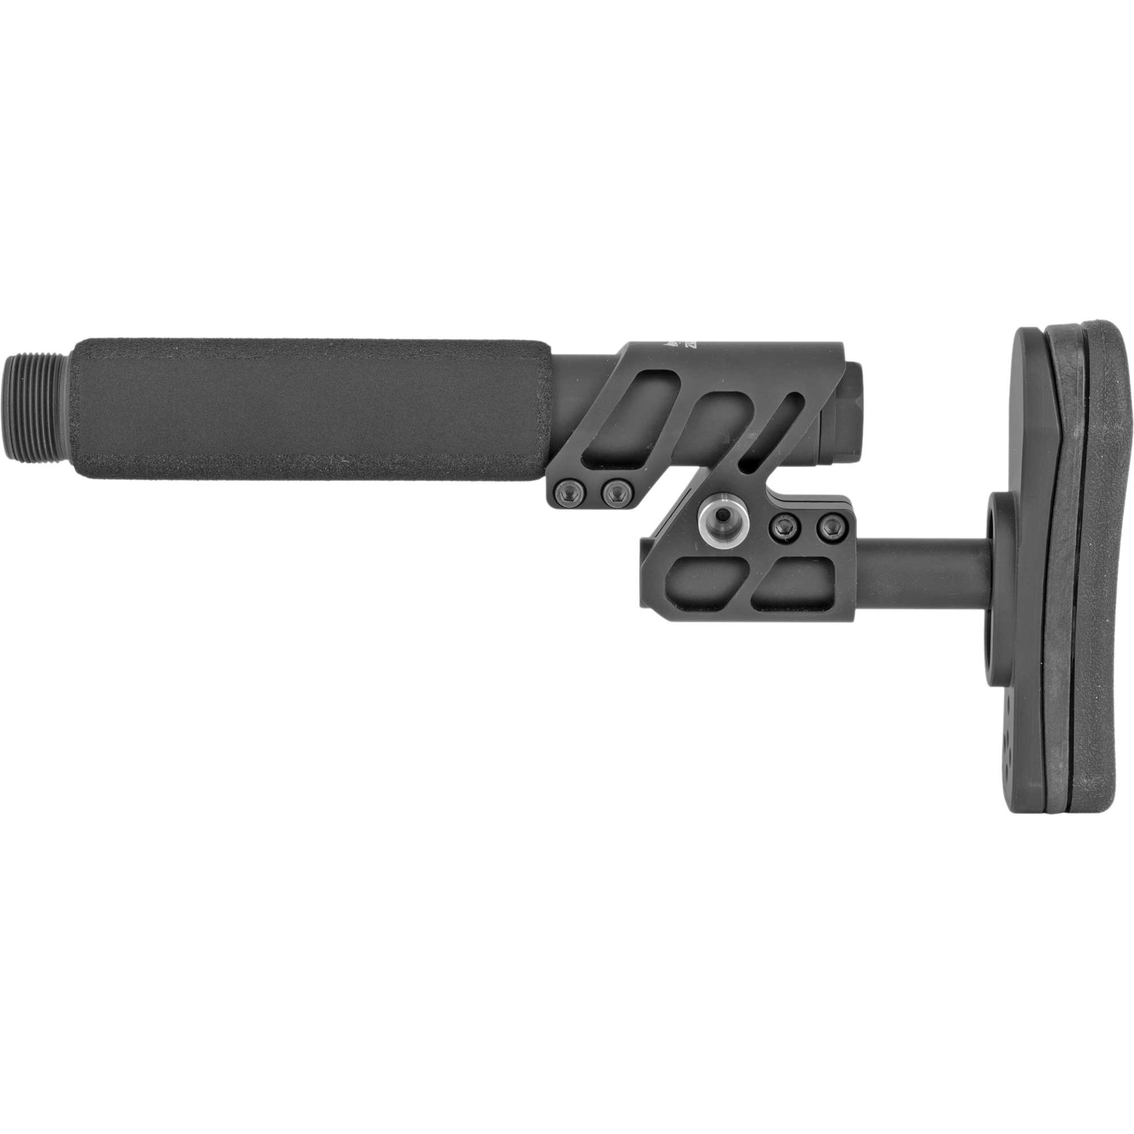 Odin Works Zulu 2.0 Adjustable Stock Kit Fits AR-15 Rifle Black - Image 2 of 3